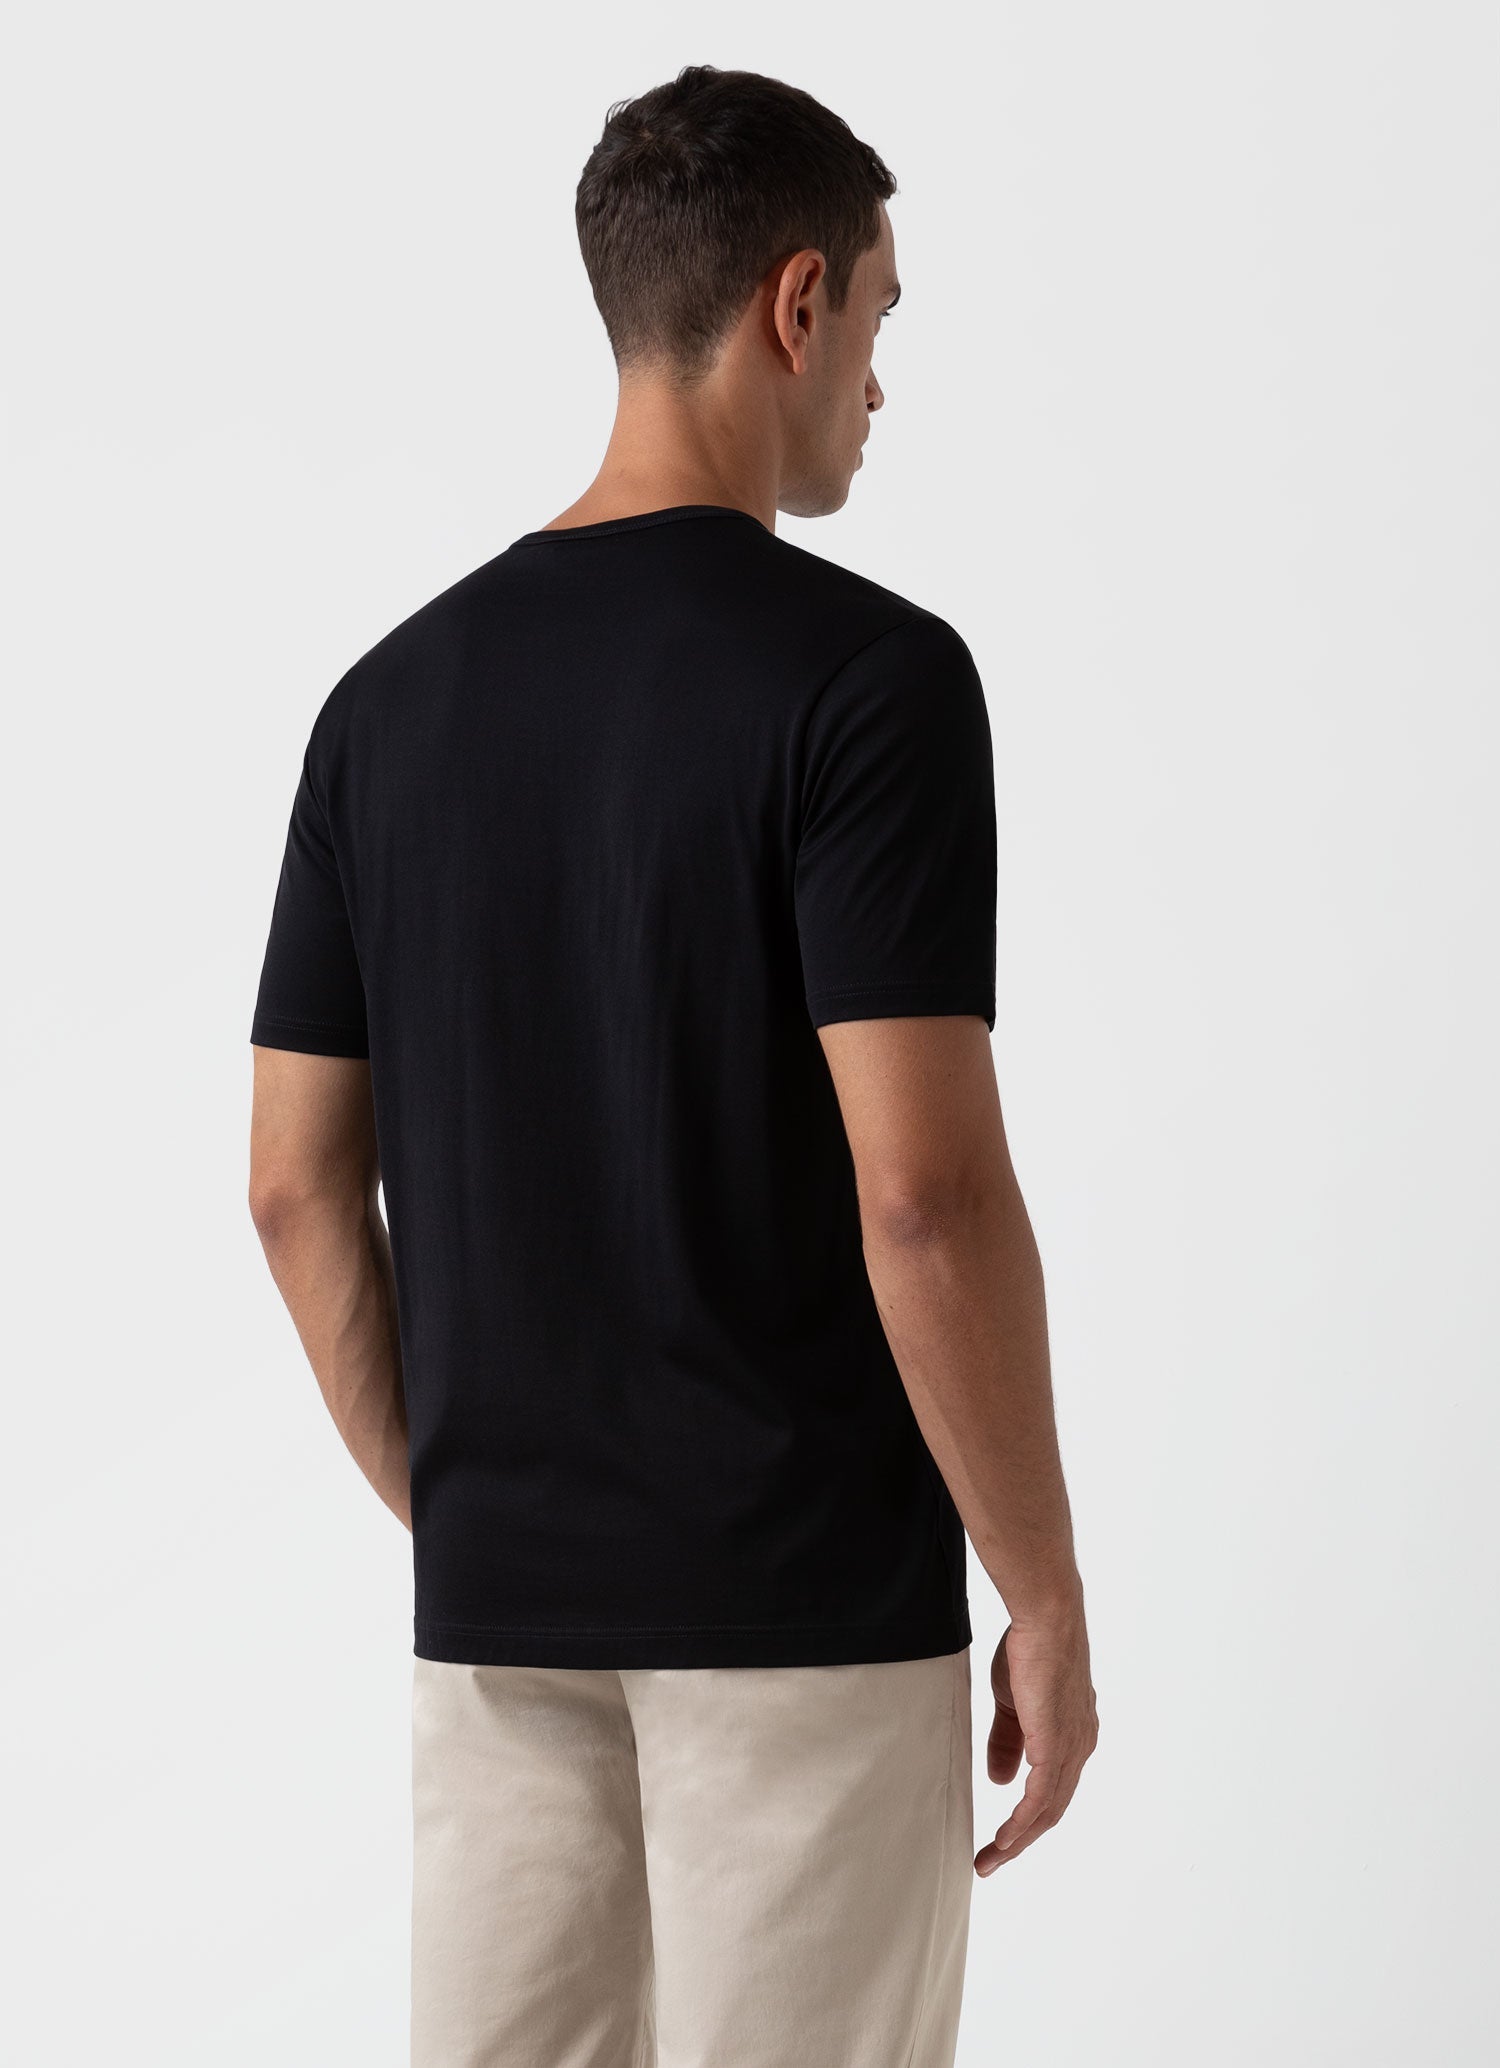 Men's Classic T-shirt in Black